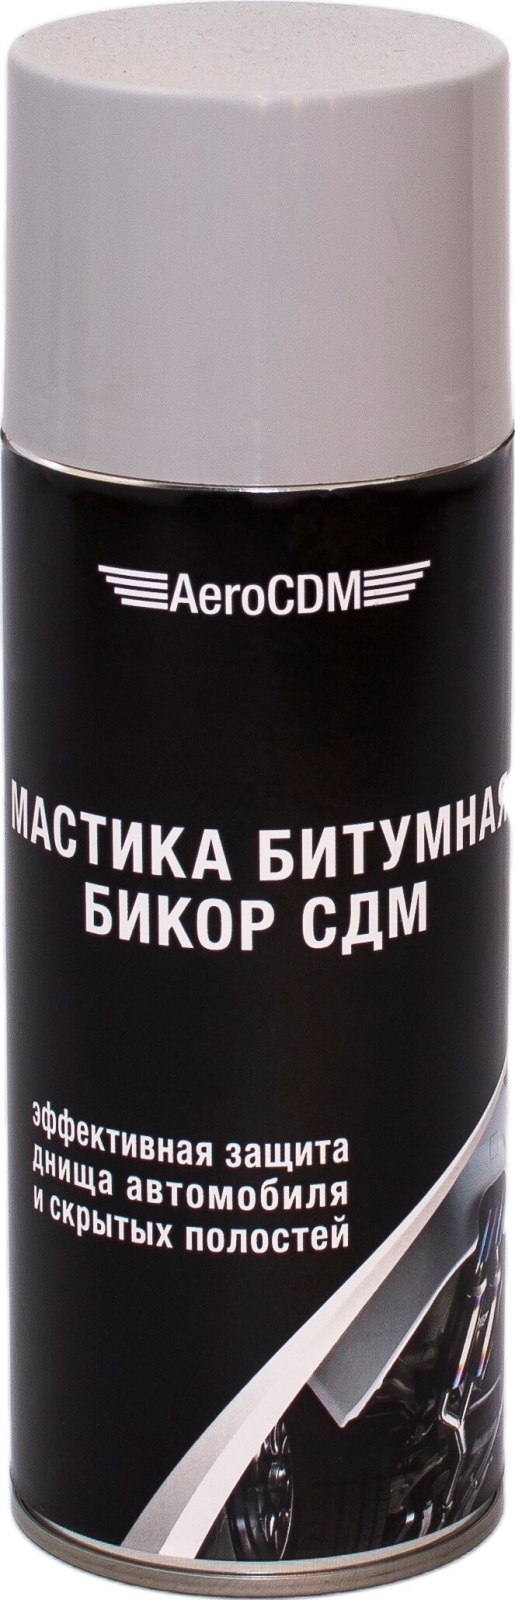 Мастика битумная AEROCDM Бикор СДМ 520 мл (001610)